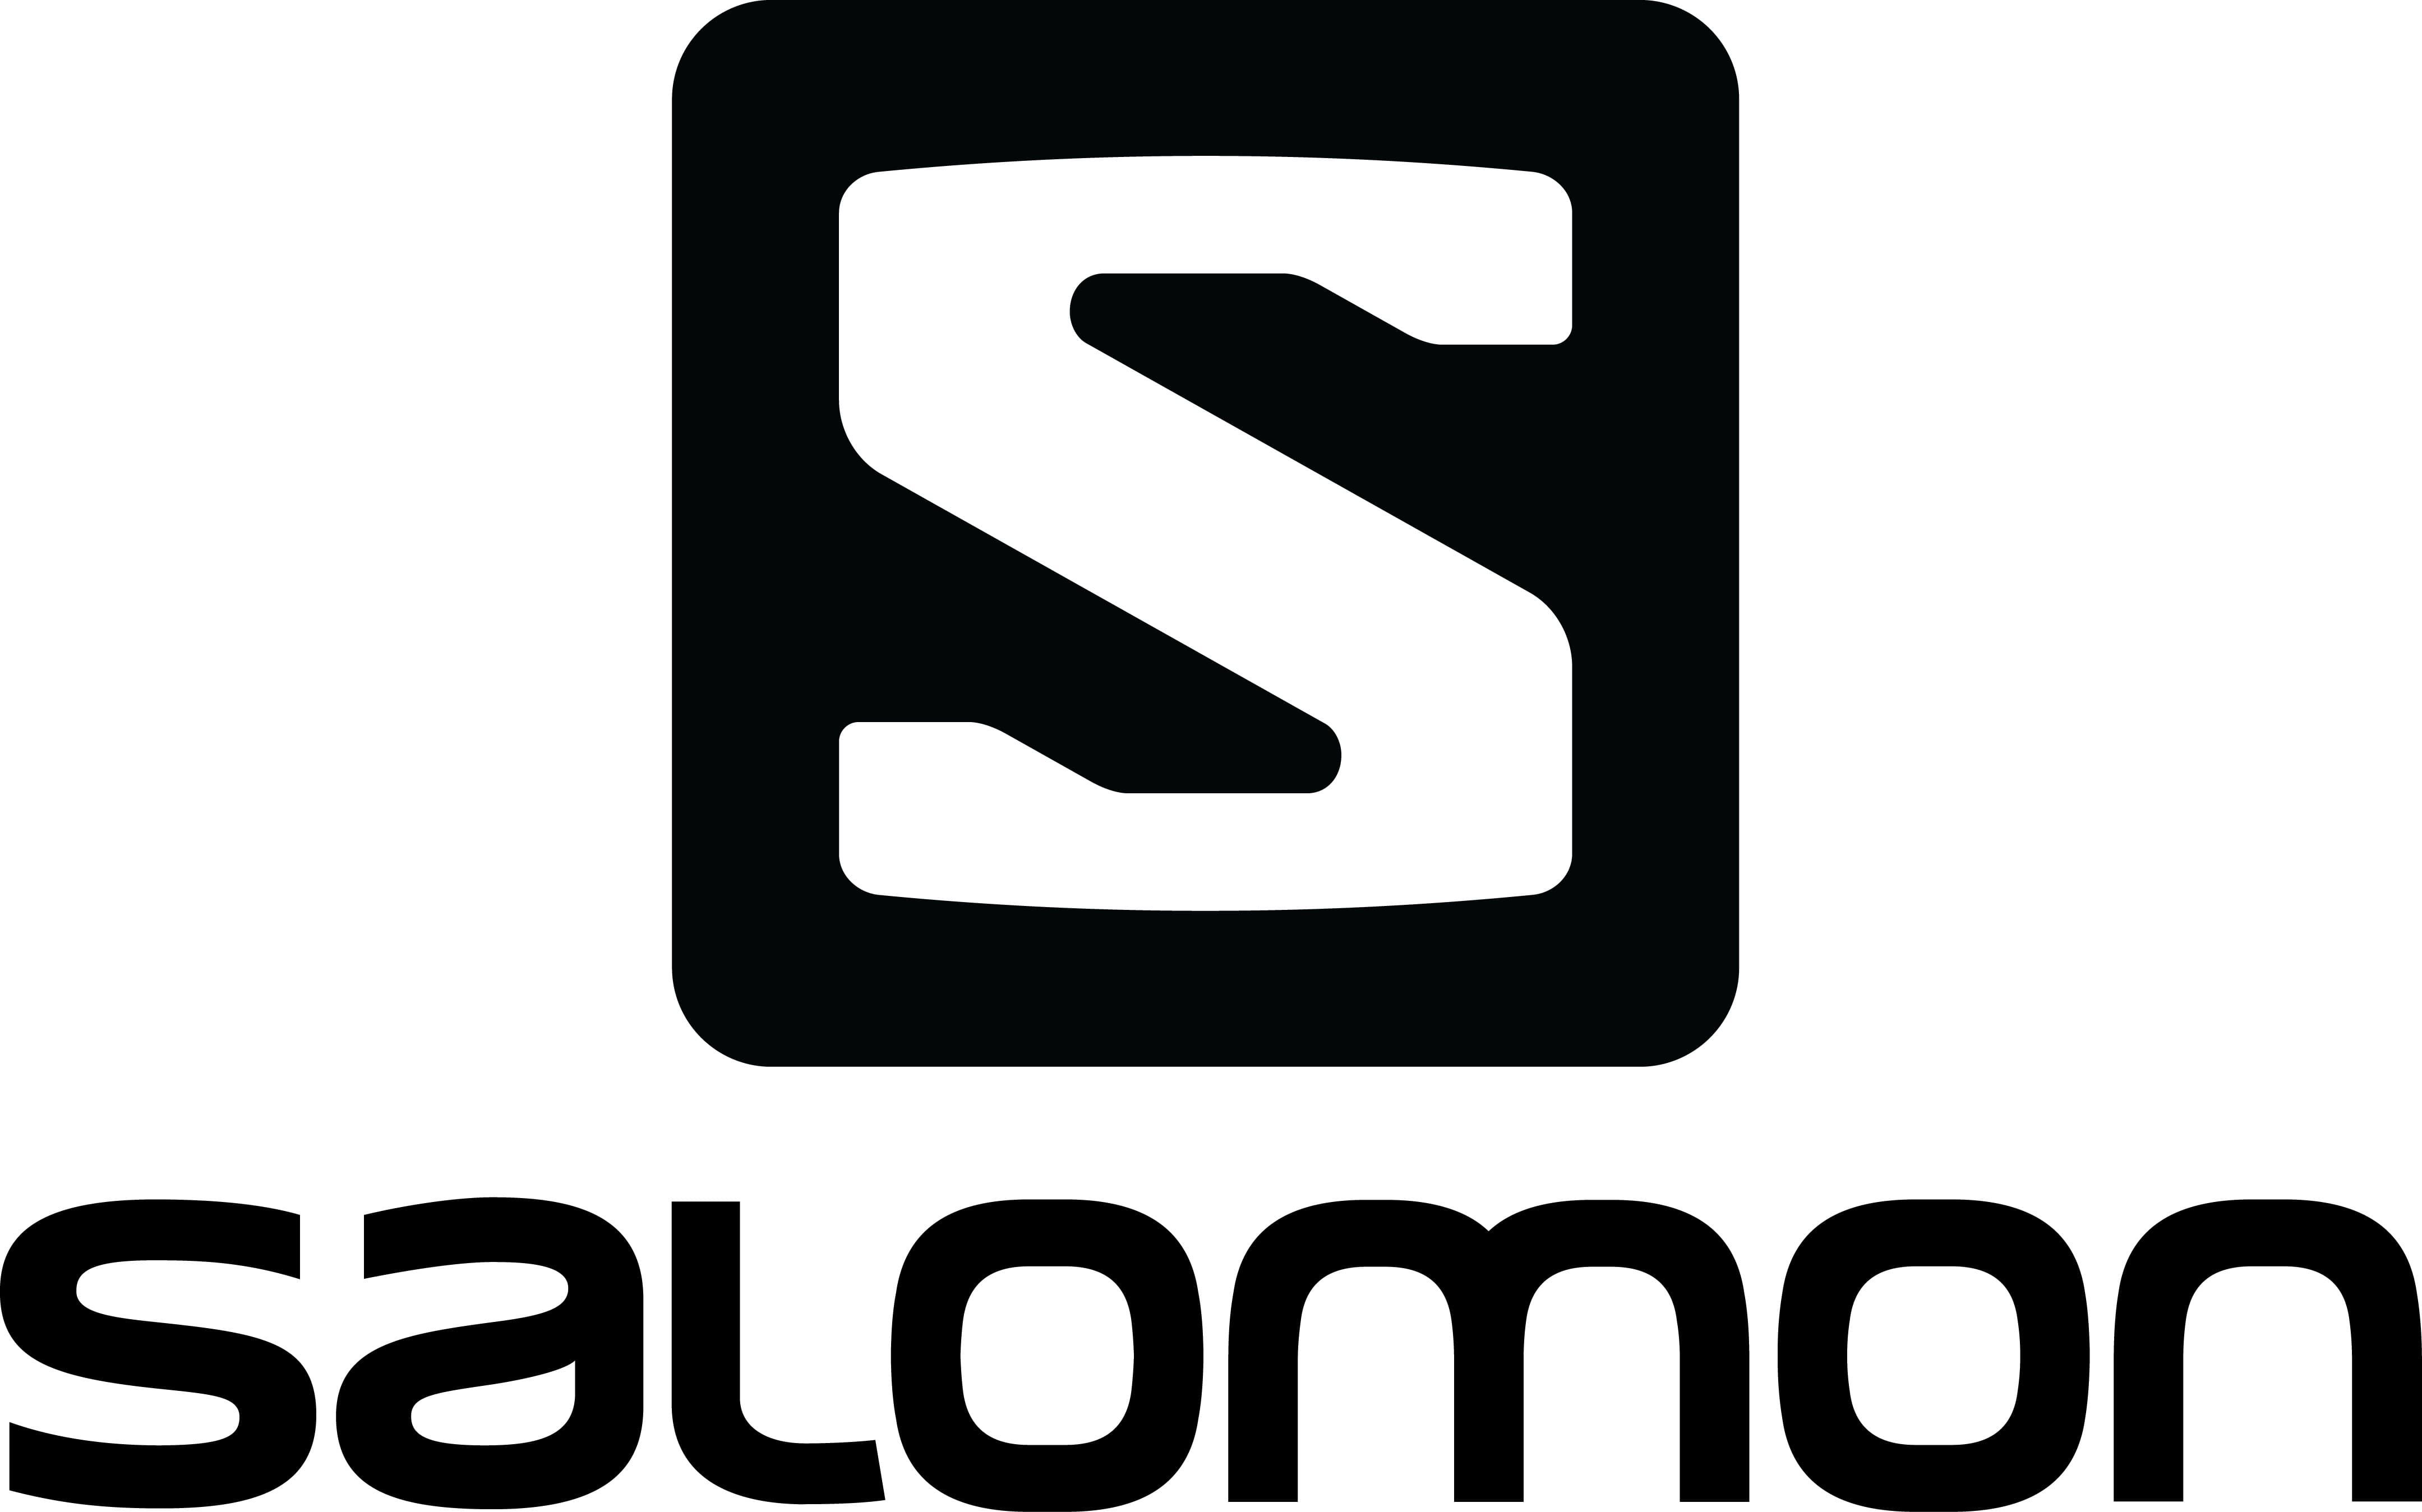 logo-salomon